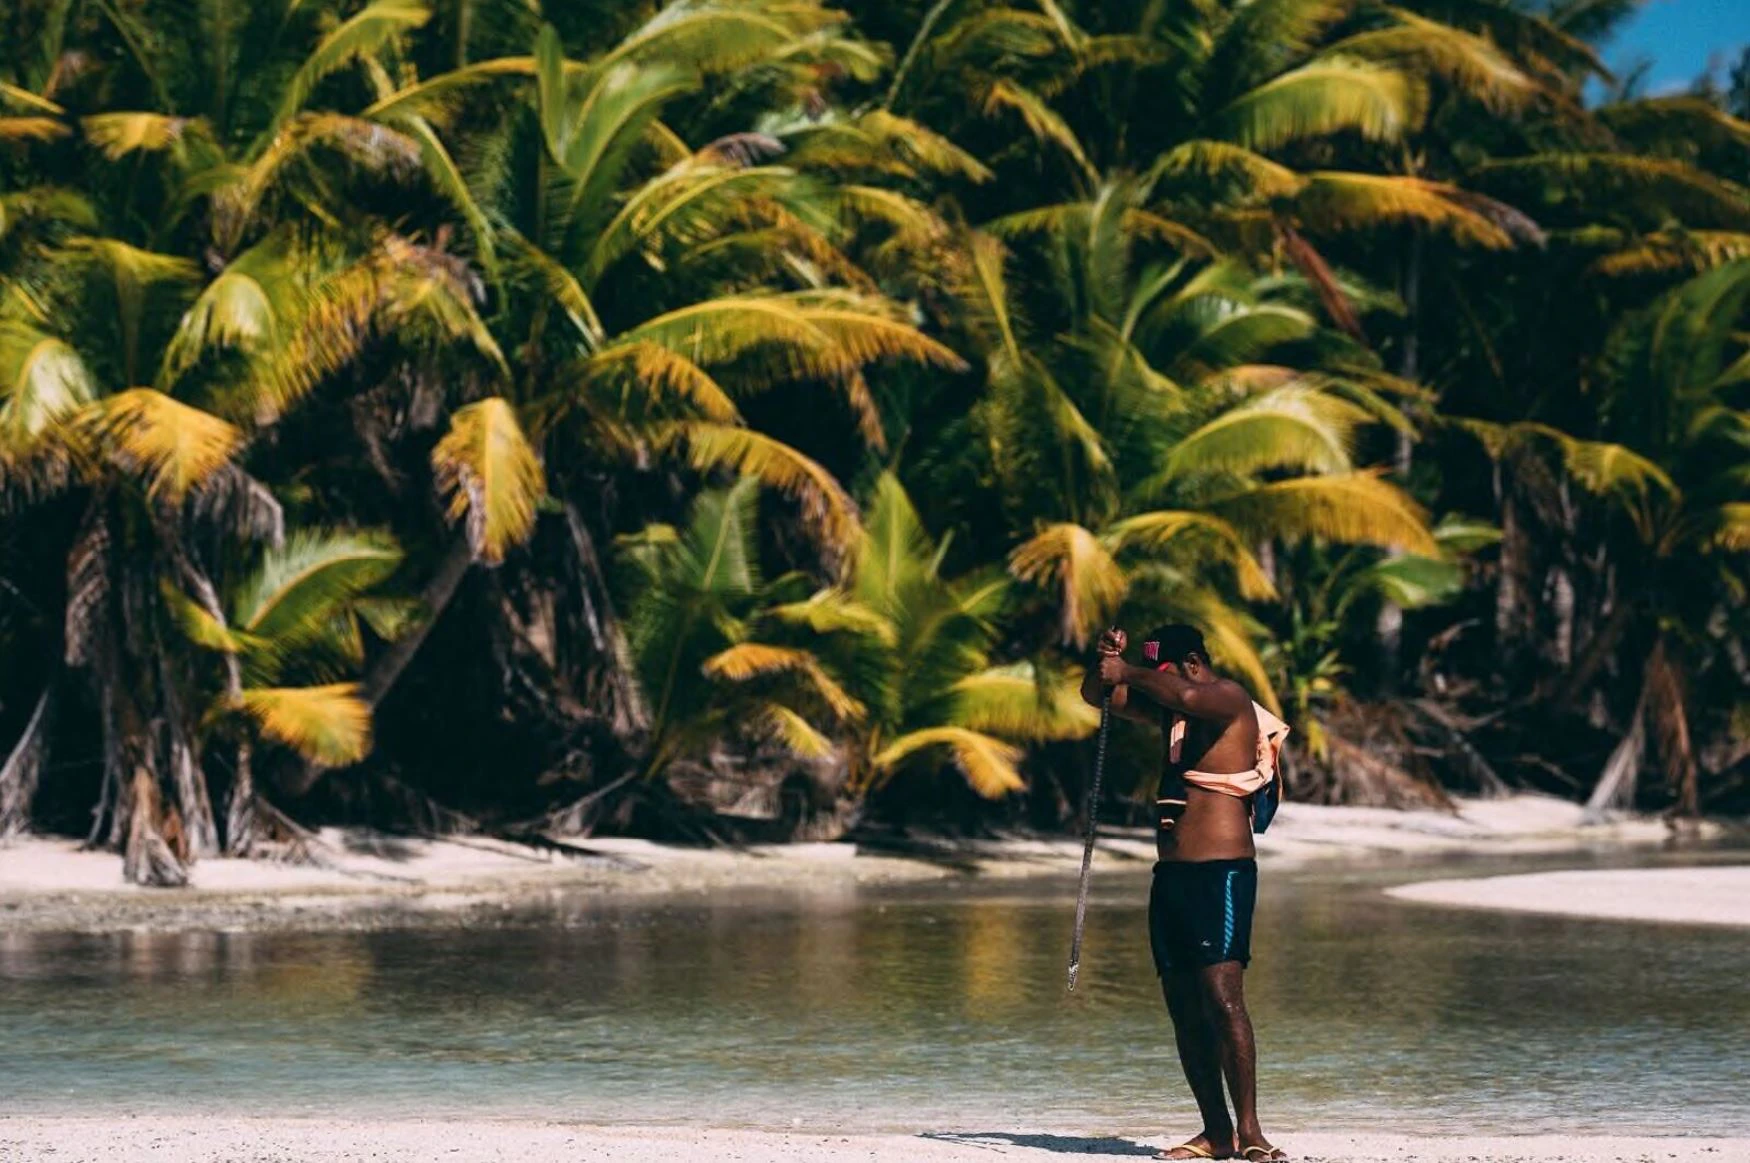 A man on a tropical island holds a rod